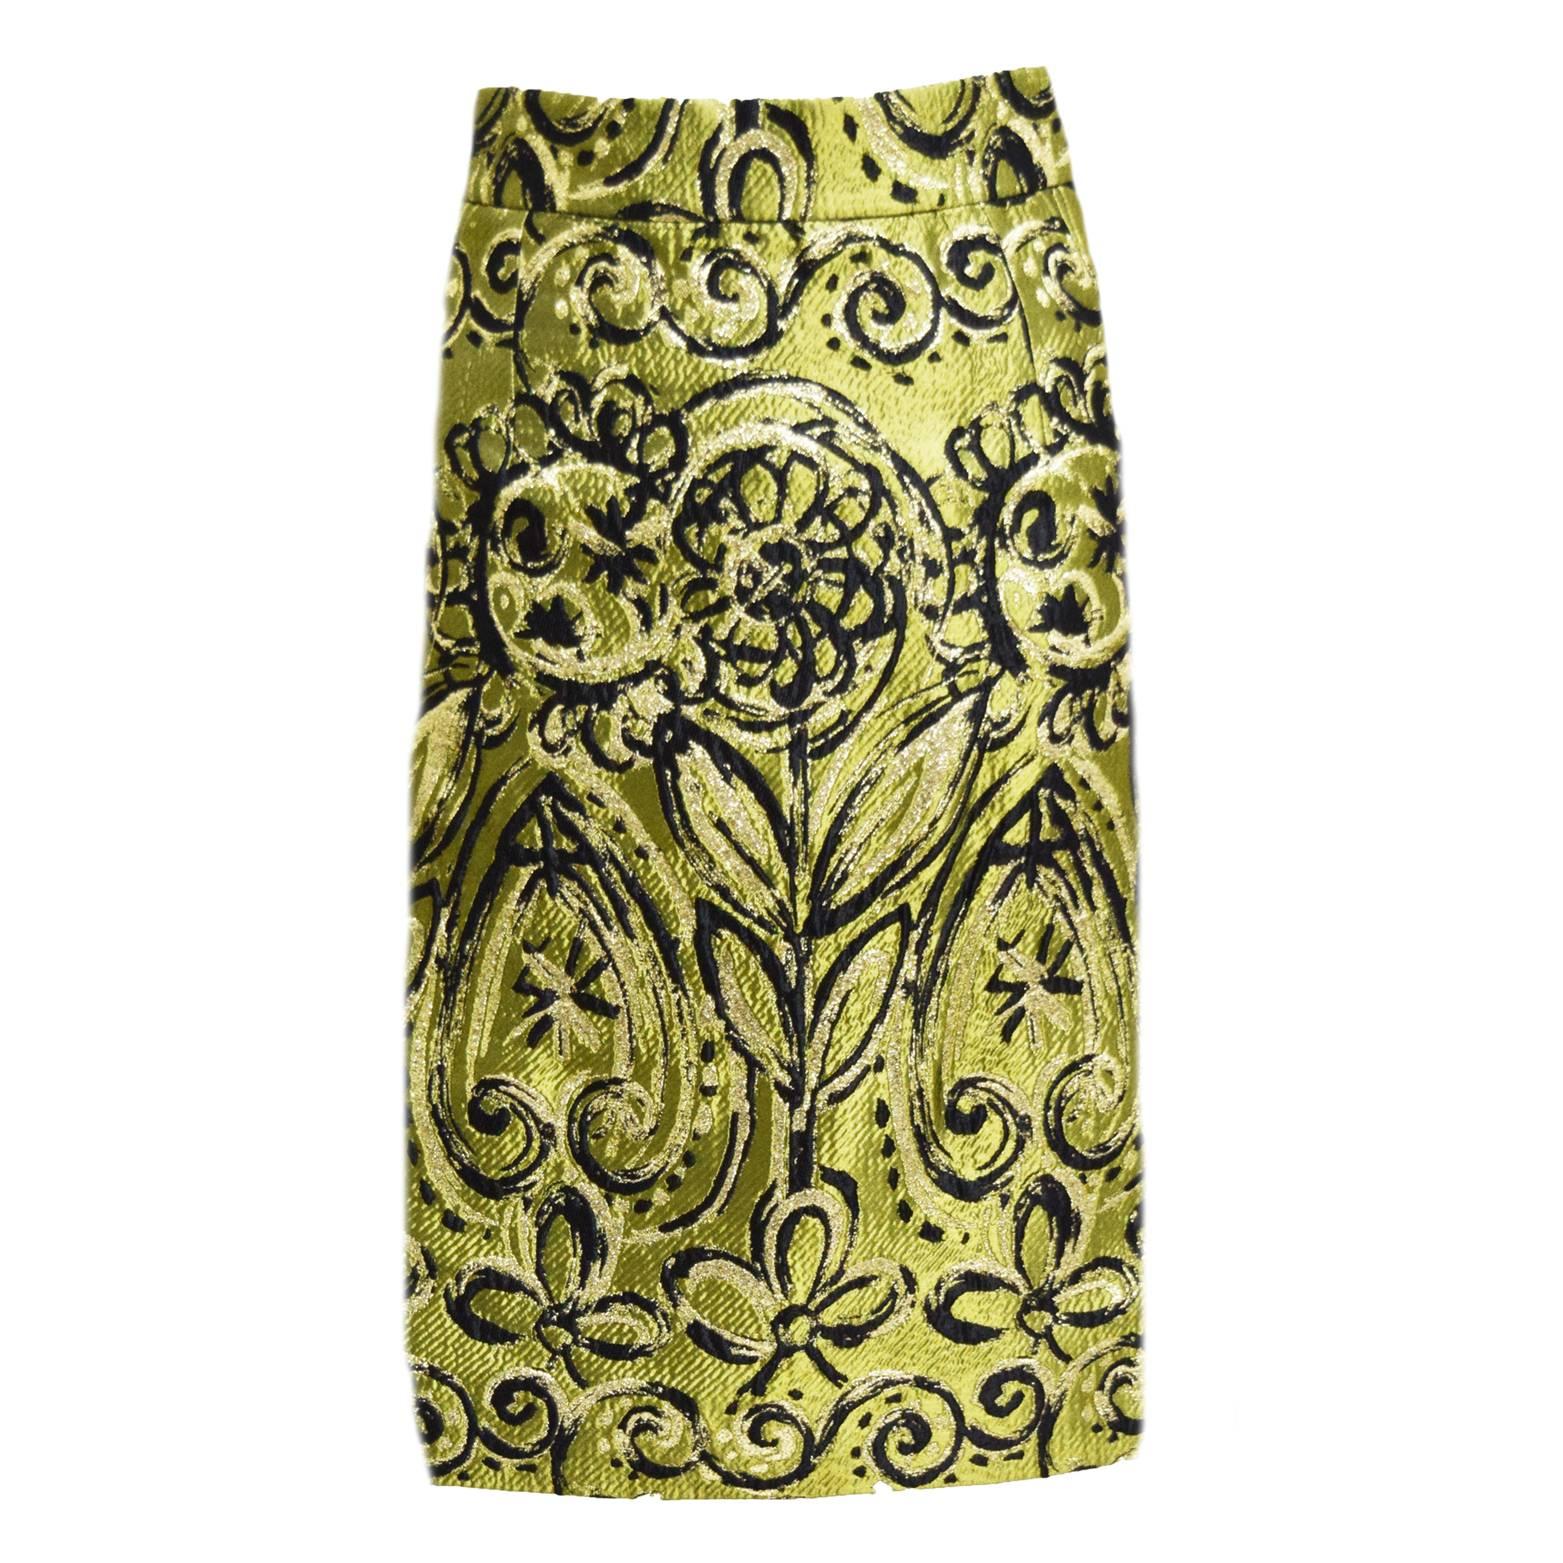 crepe pantsuit with brocade skirt overlay